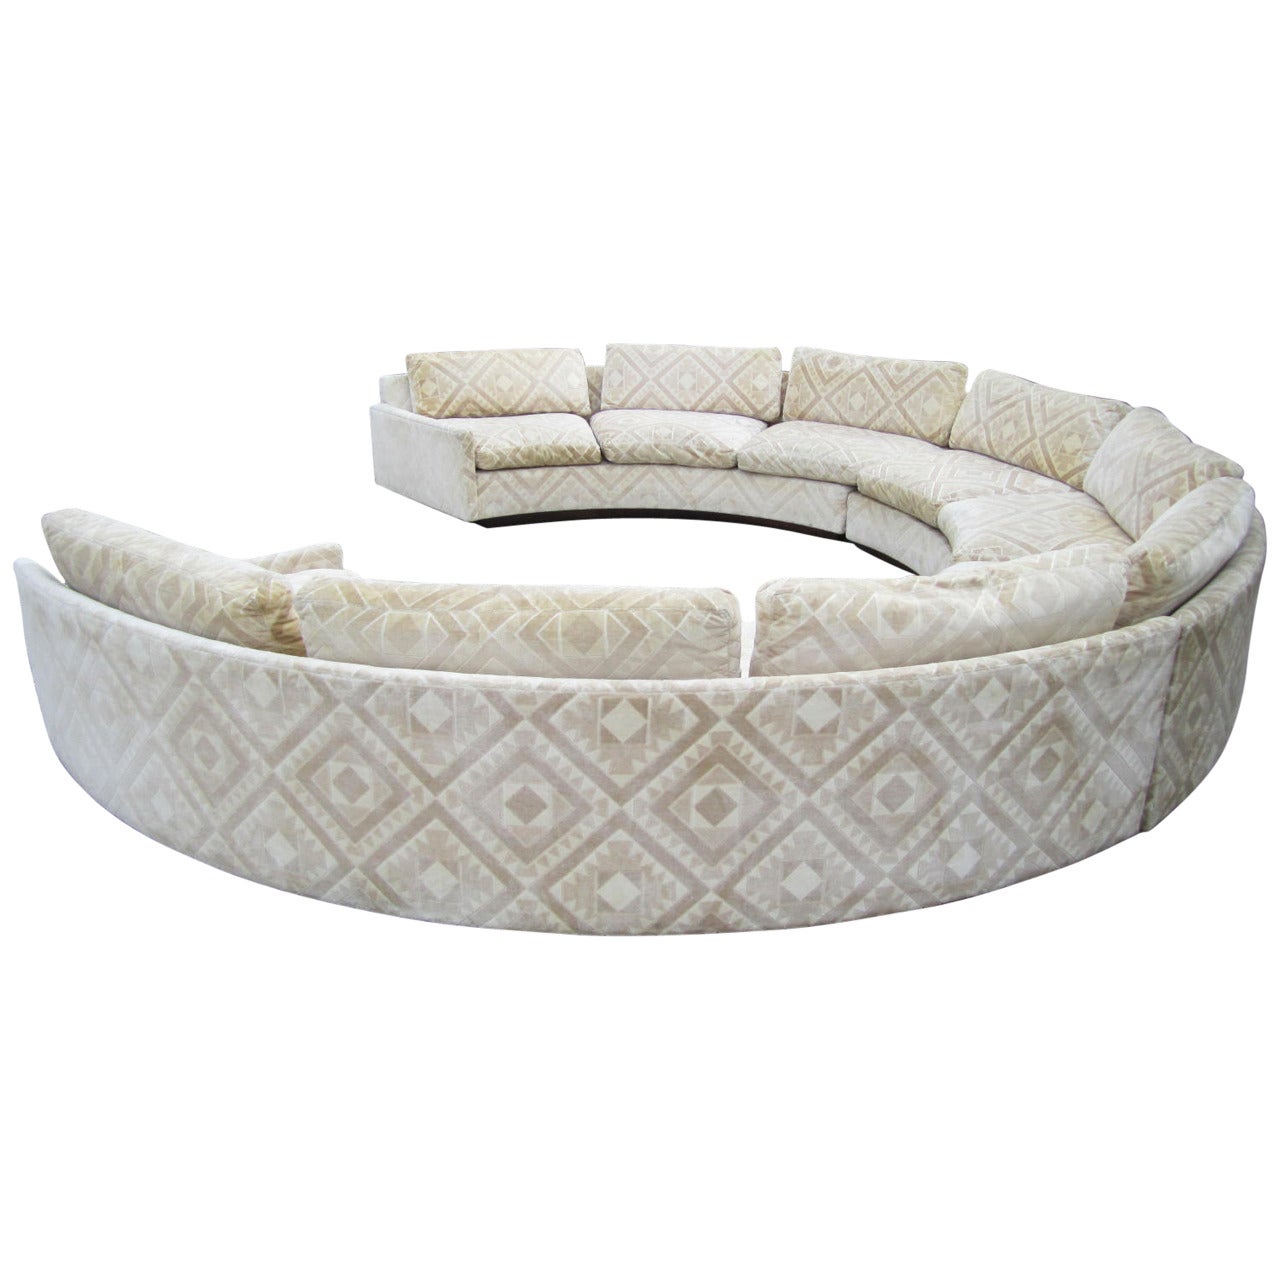 Spectacular Three-Piece Milo Baughman Circular Sofa, Mid-Century Modern Curved